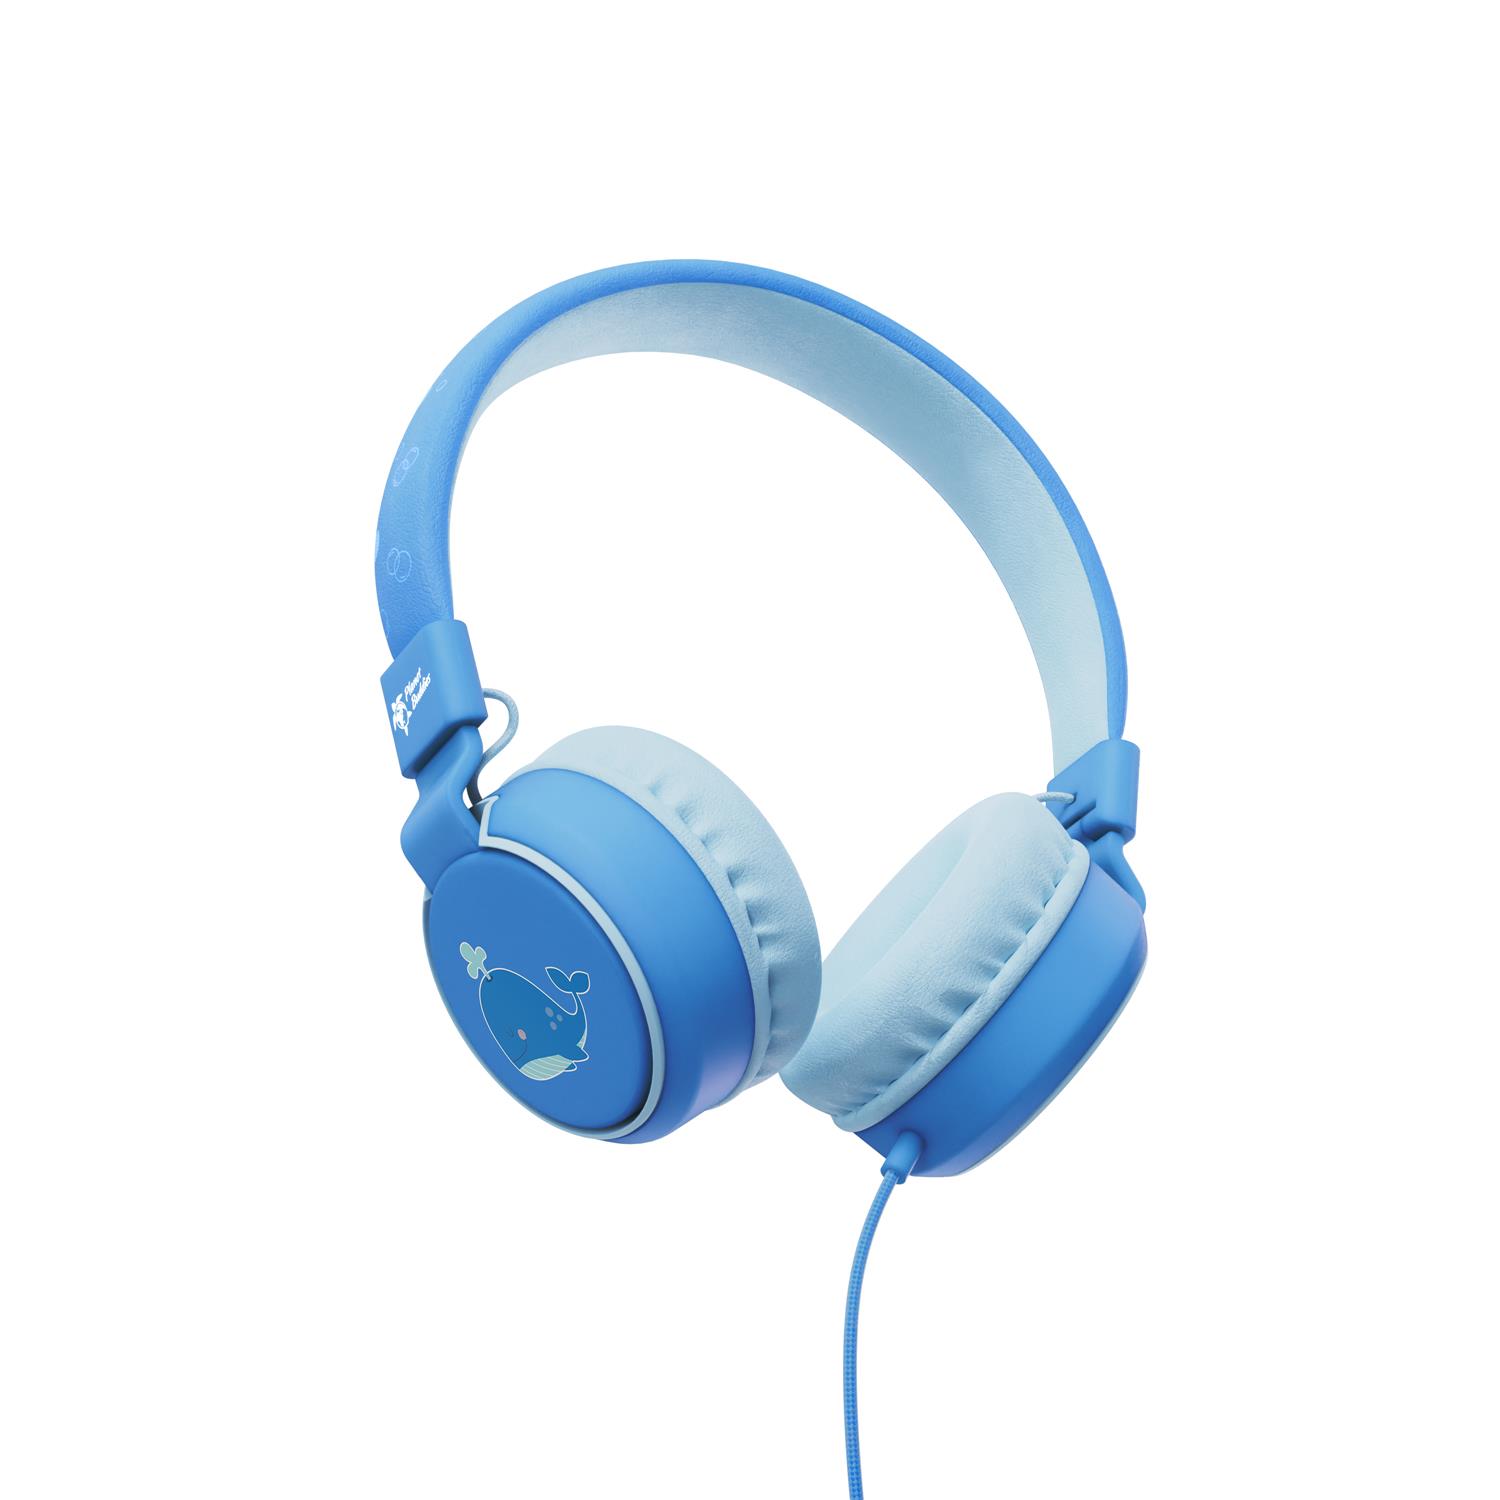 Planet Buddies Whale Wired Headphones V2 in Blau